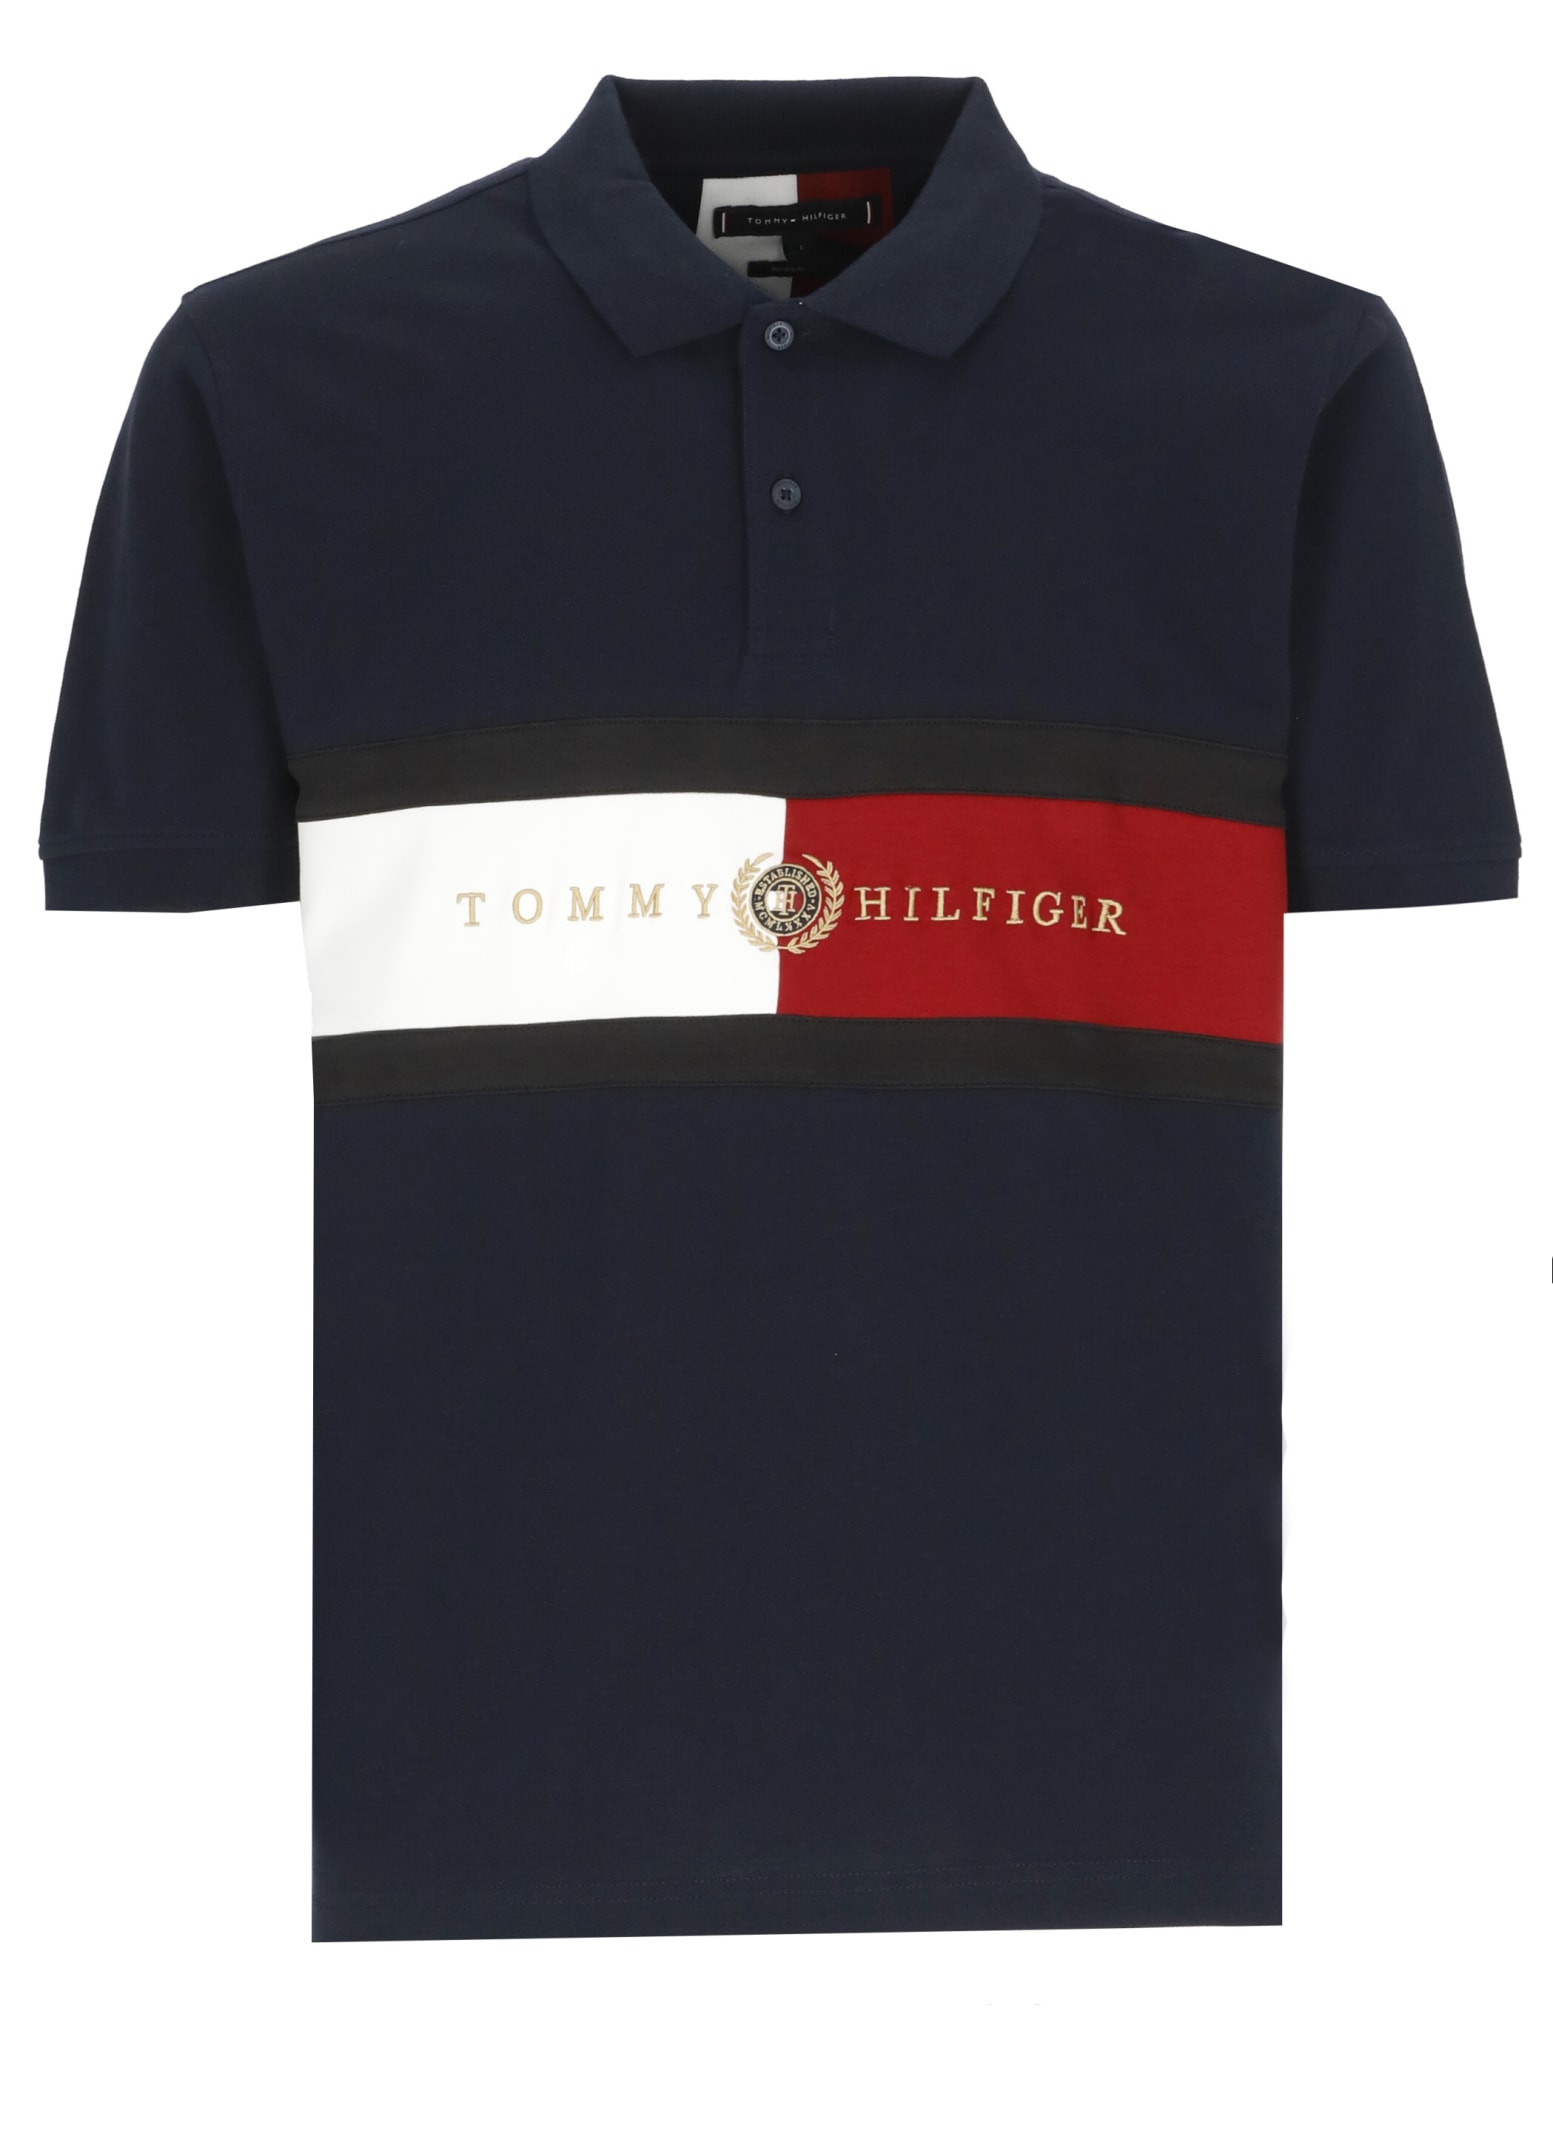 Tommy Hilfiger Iconic Flag Polo Shirt